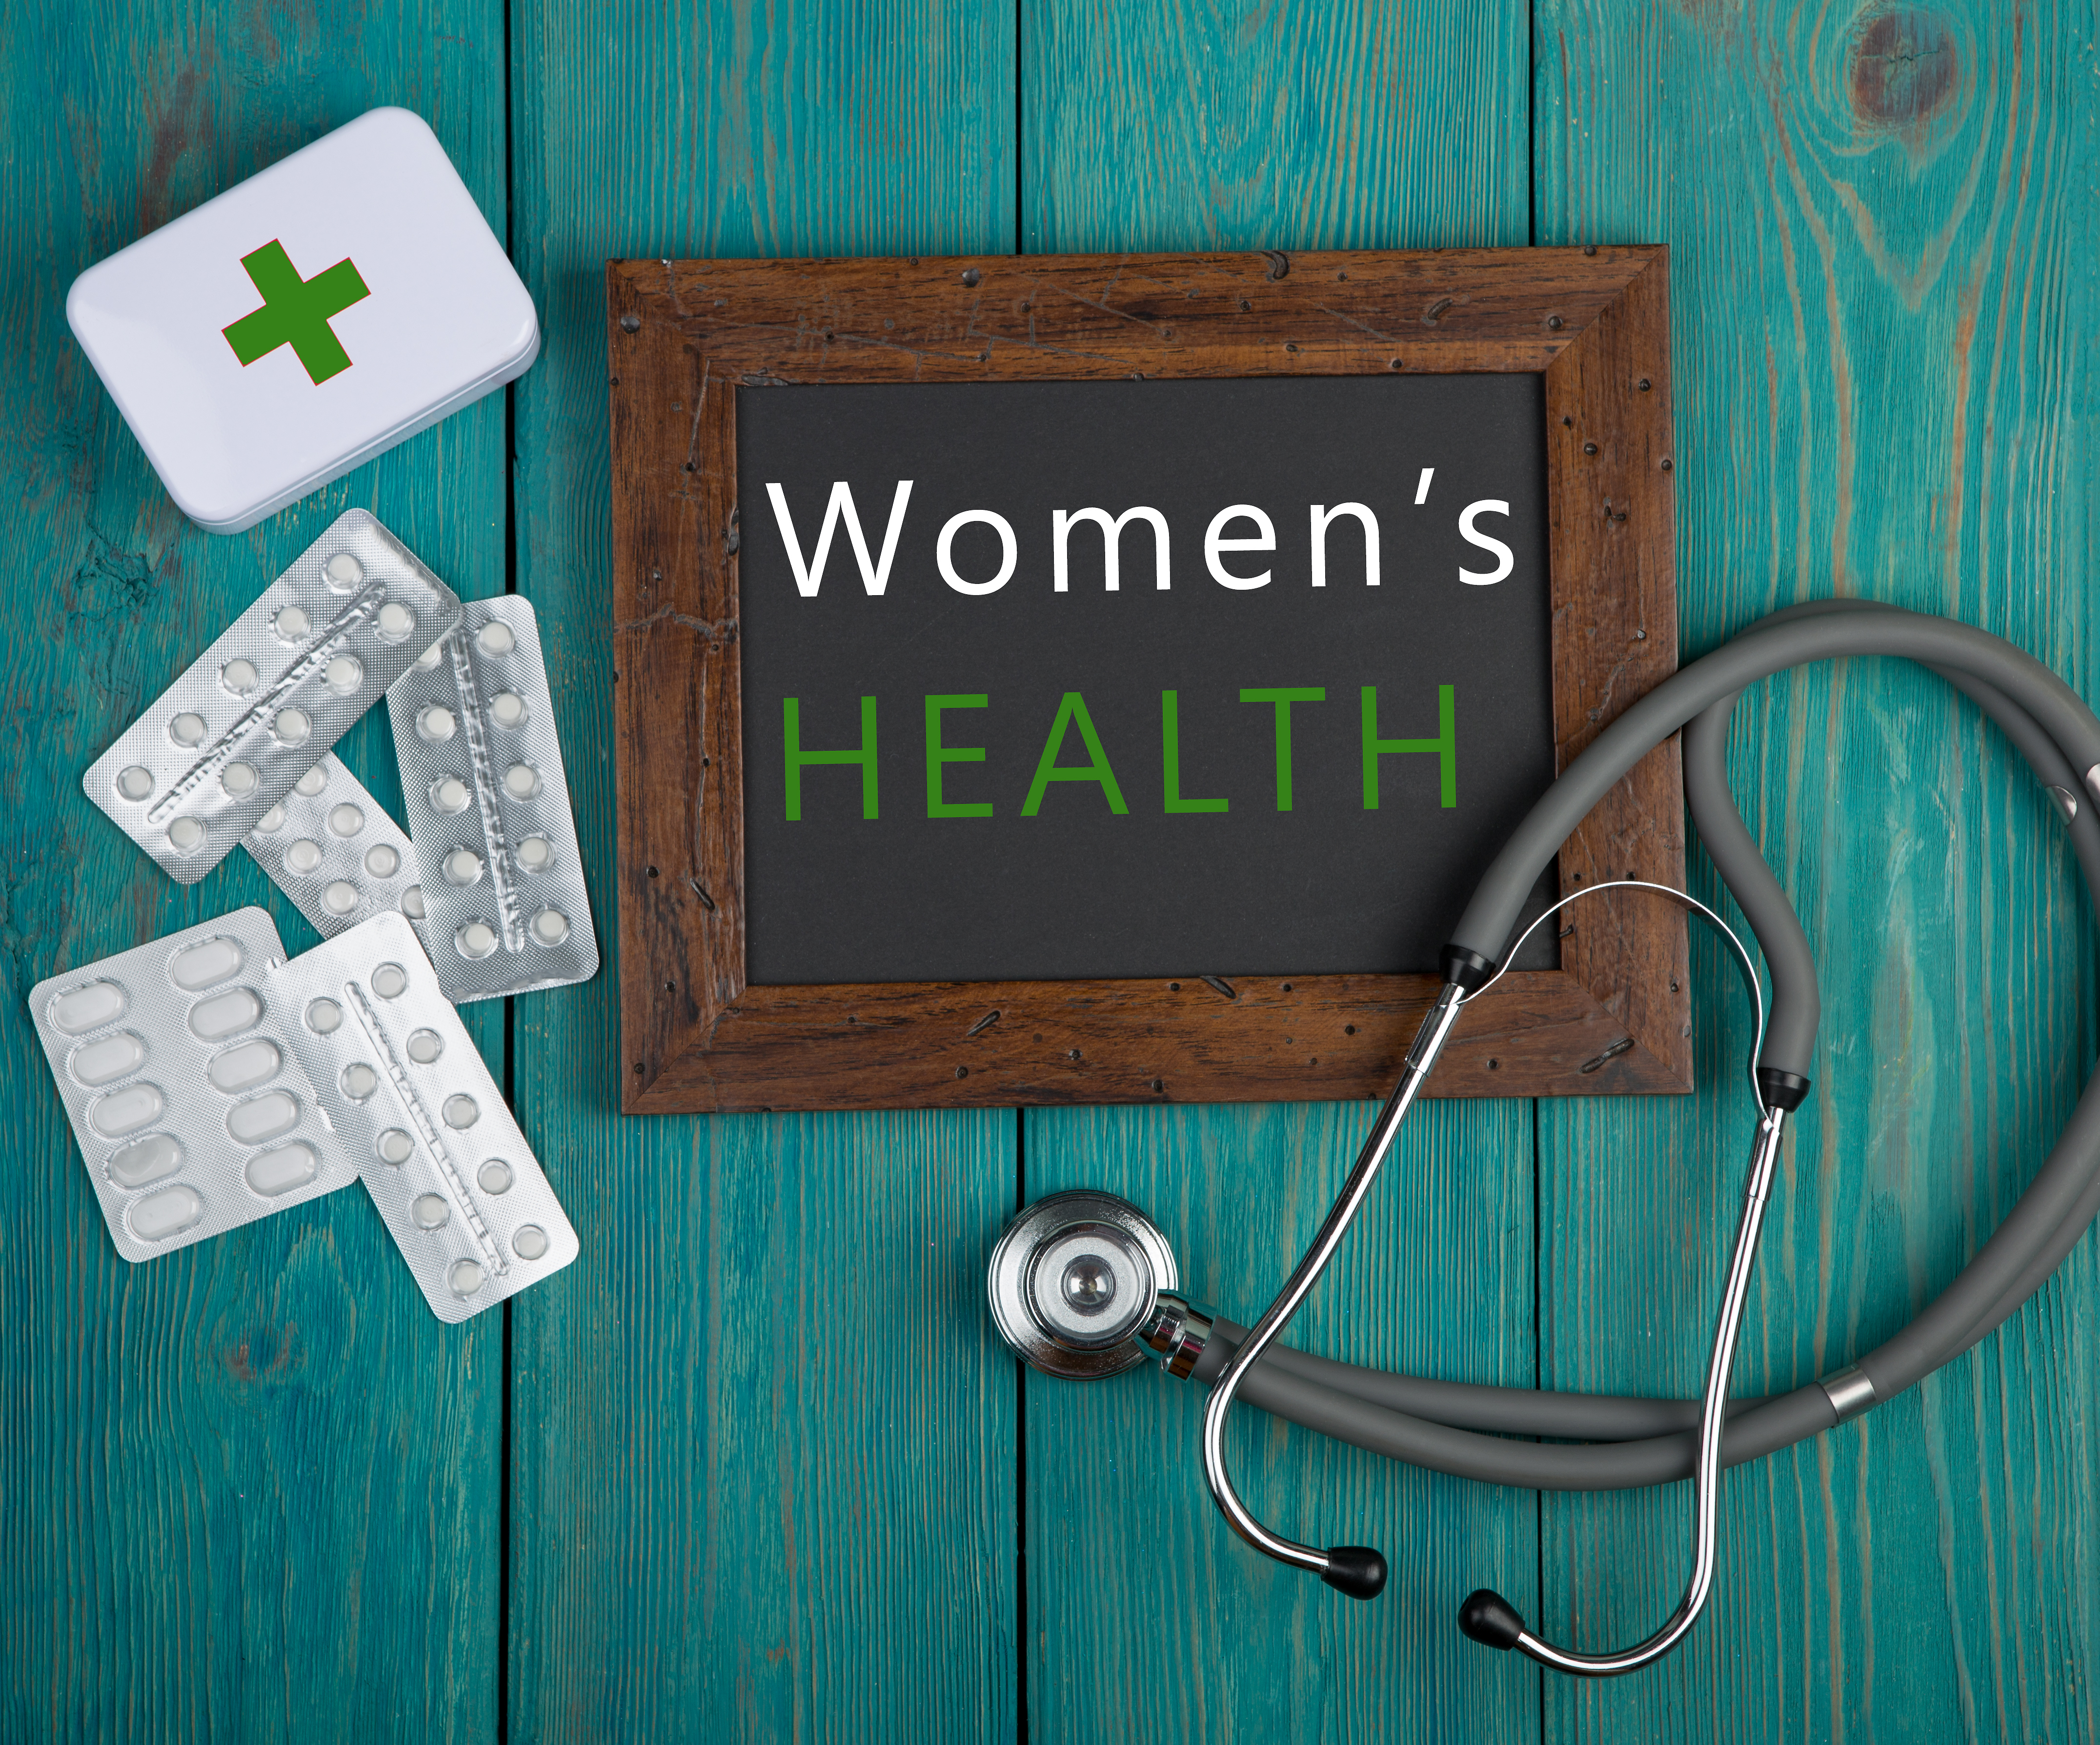 Blackboard with text “Women’s health”, stethoscope, pills